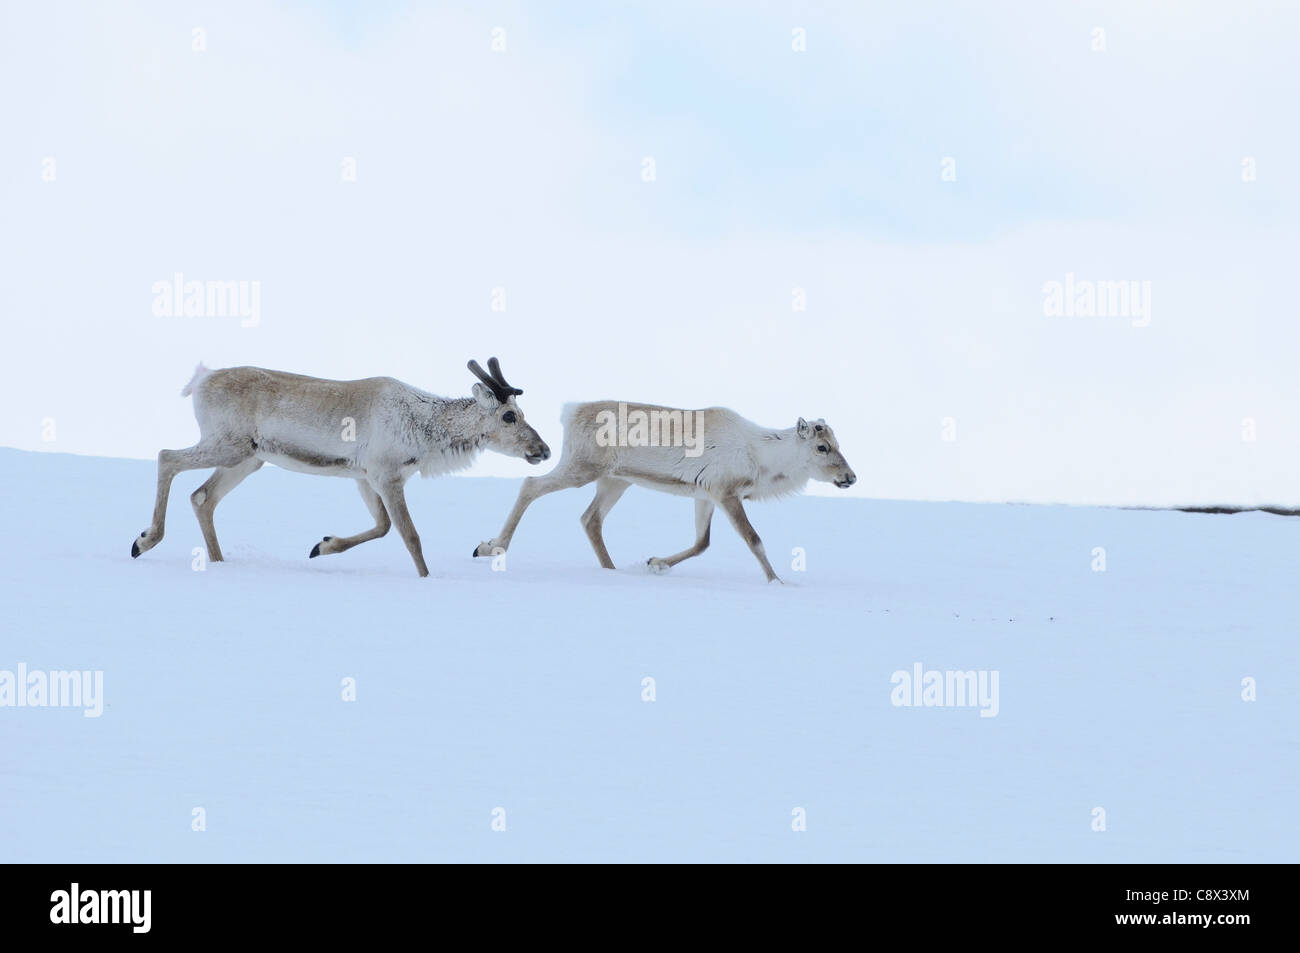 Reindeer (Rangifer tarandus) two running together over snow, Finland Stock Photo